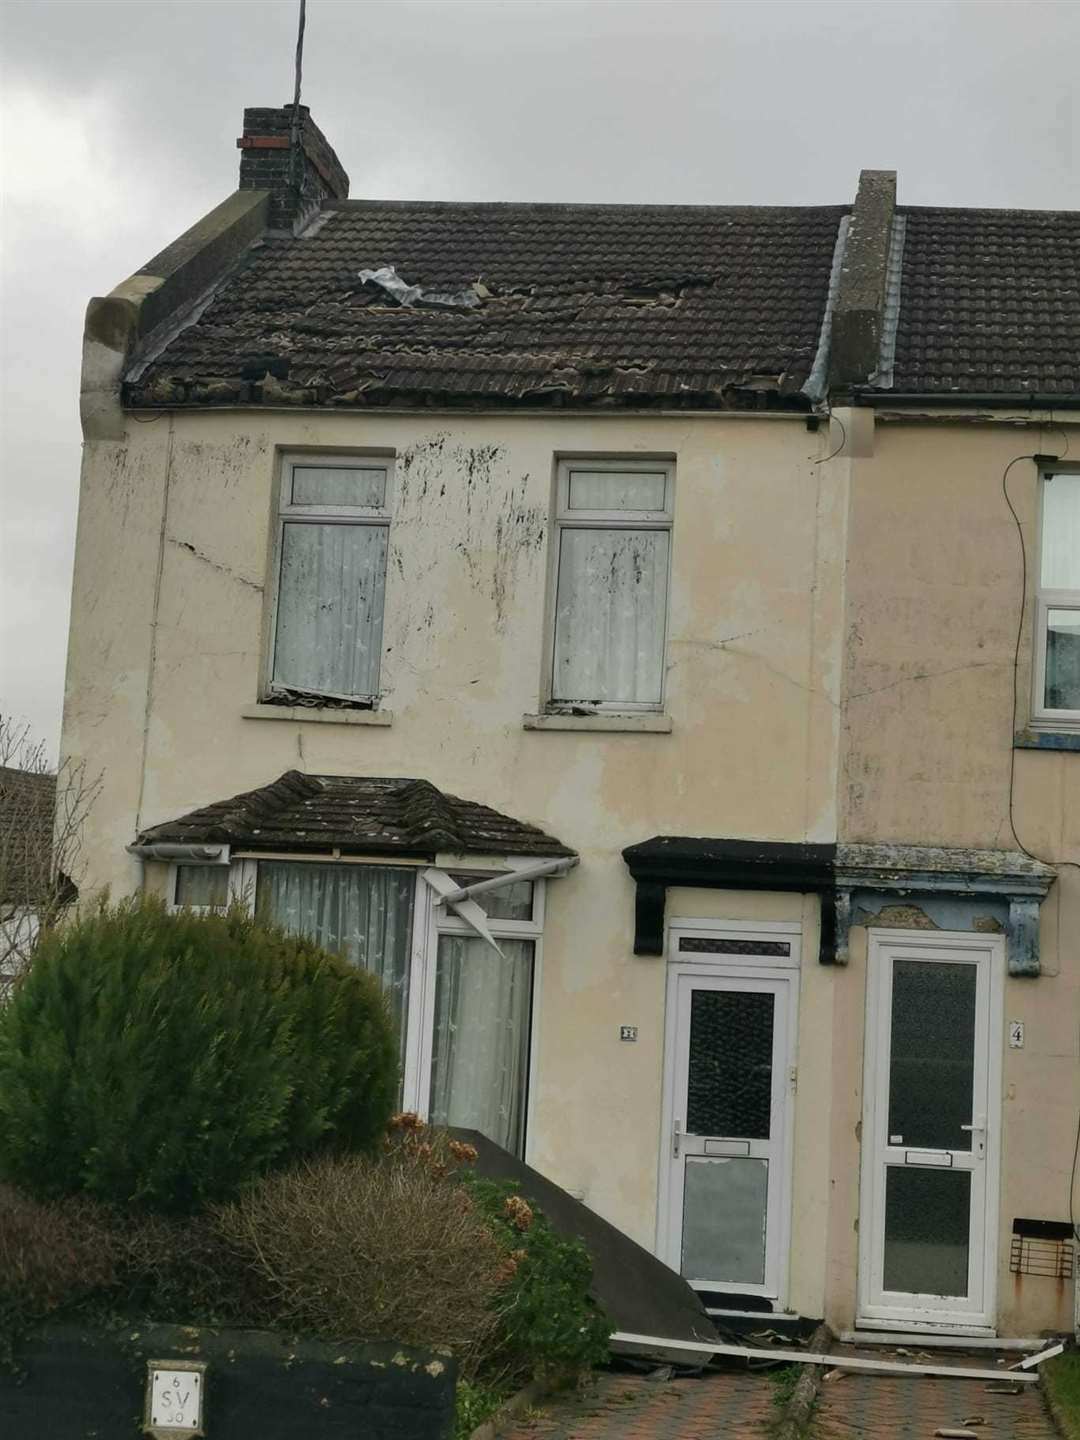 Loose roof tiles were common across Kent. Picture: Jack Archer